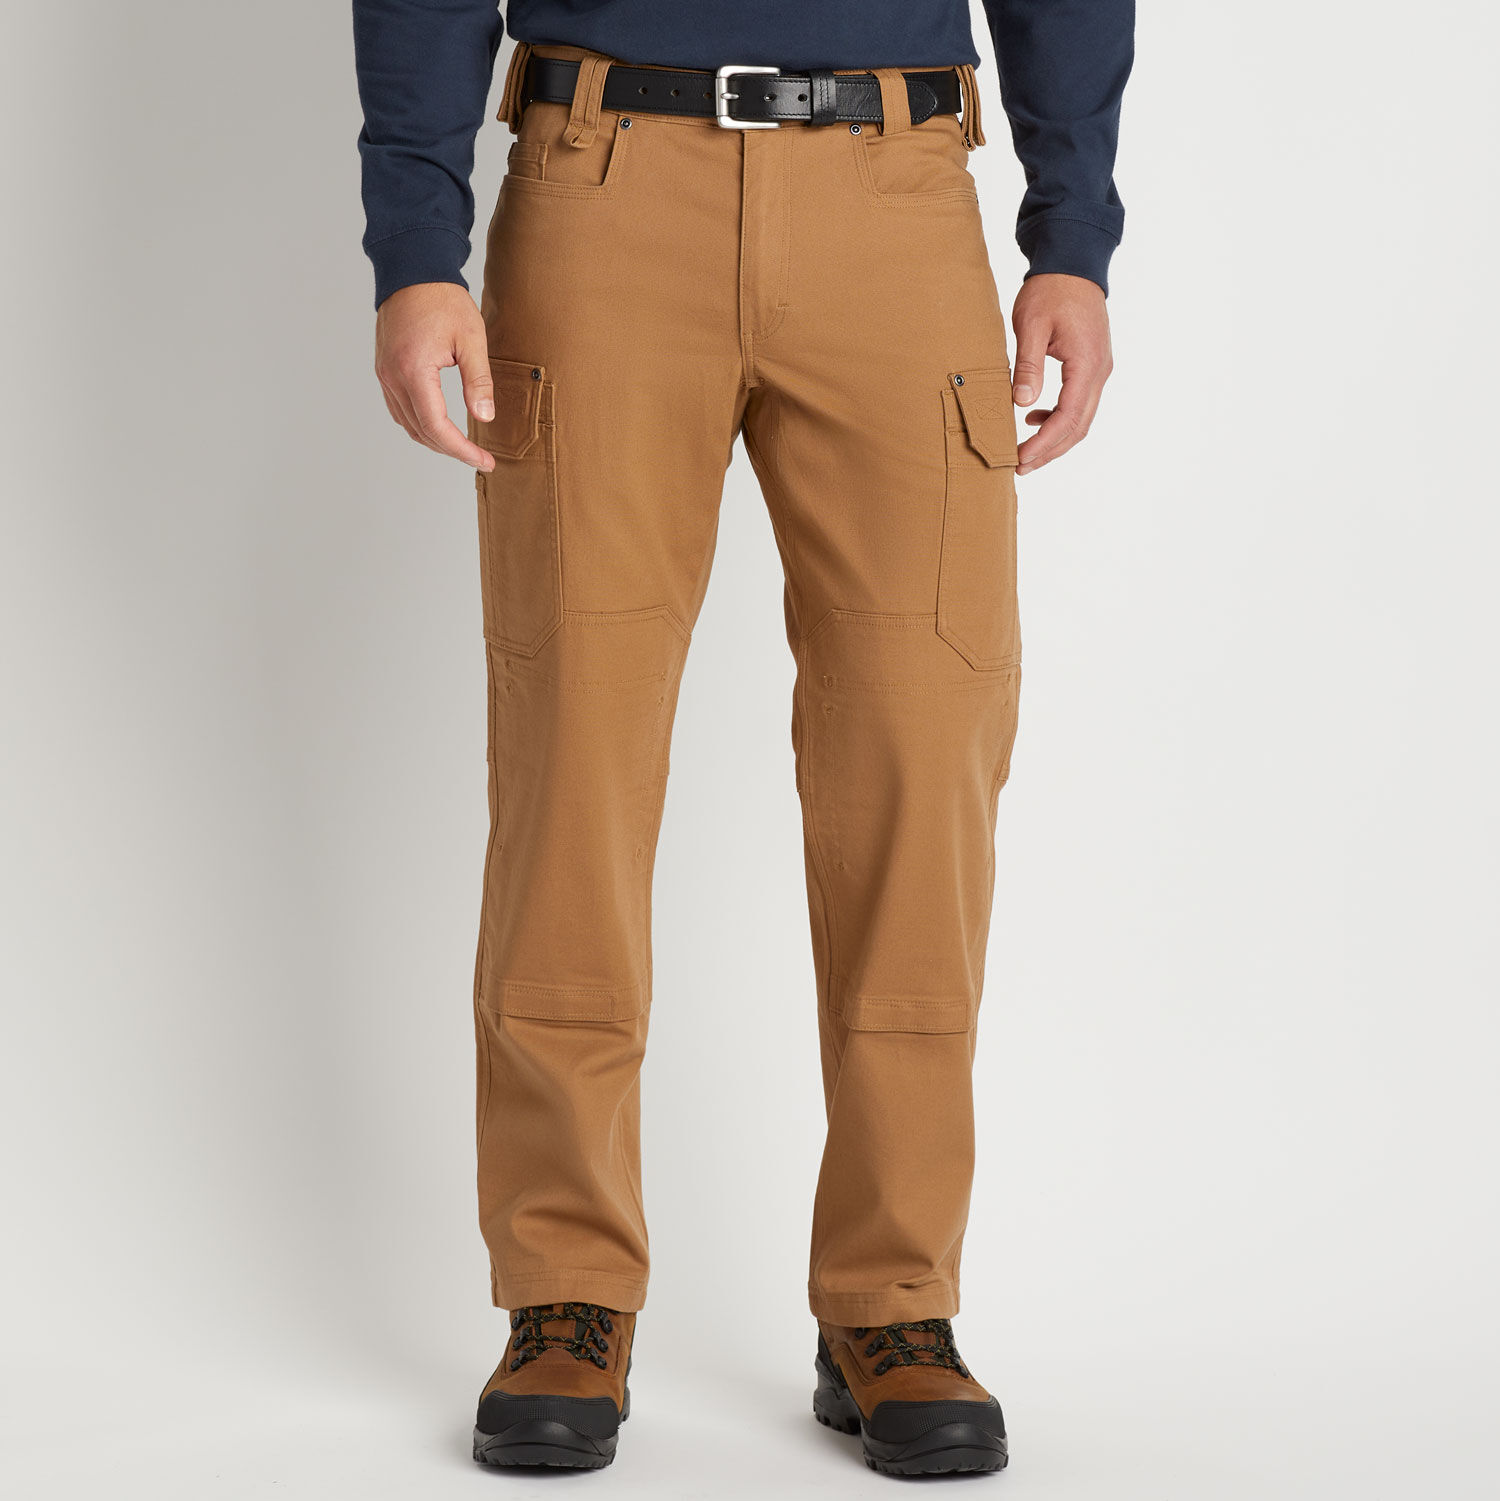 Men's DuluthFlex Fire Hose Standard Fit Ultimate Cargo Pants 